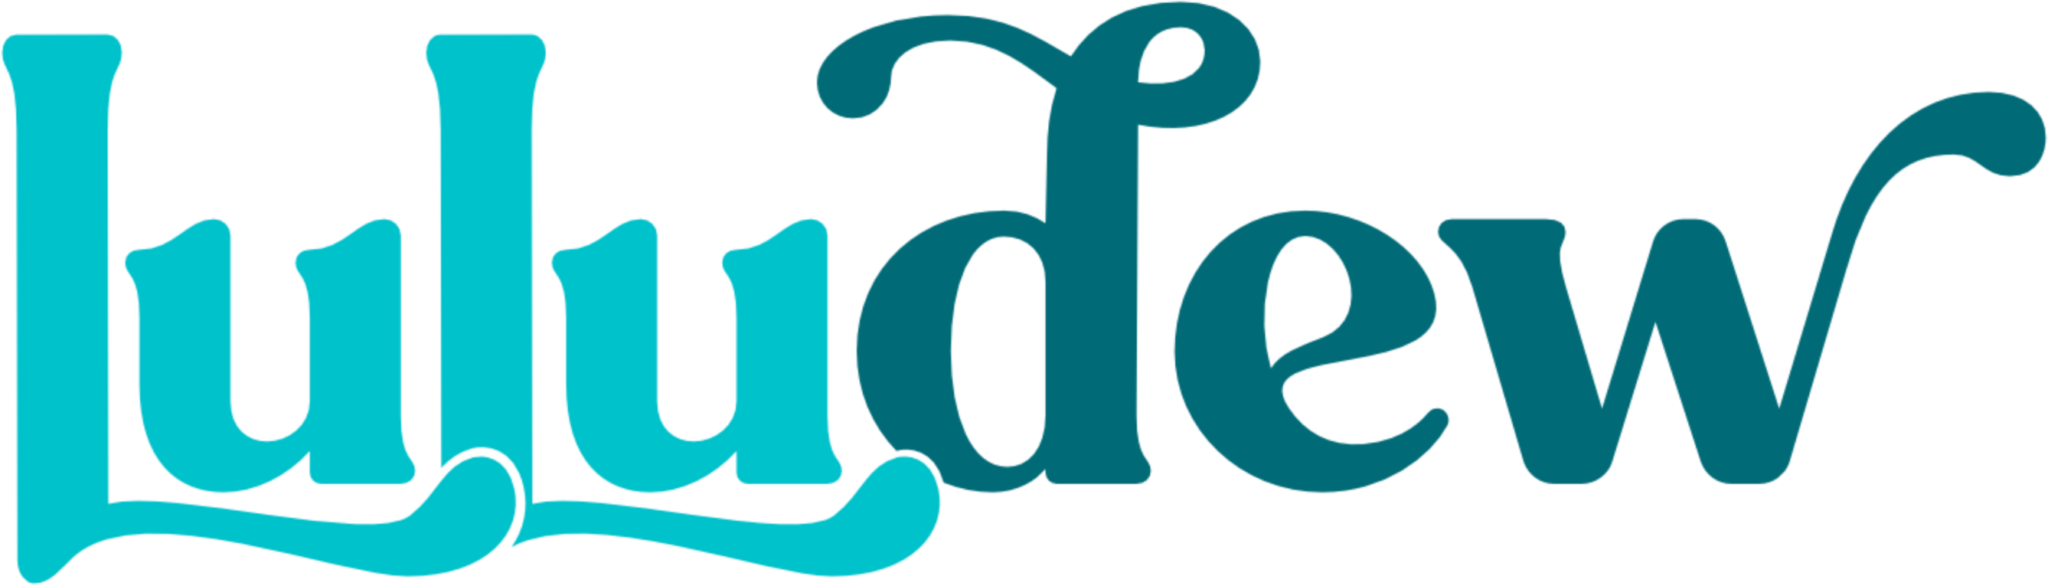 Luludew logo